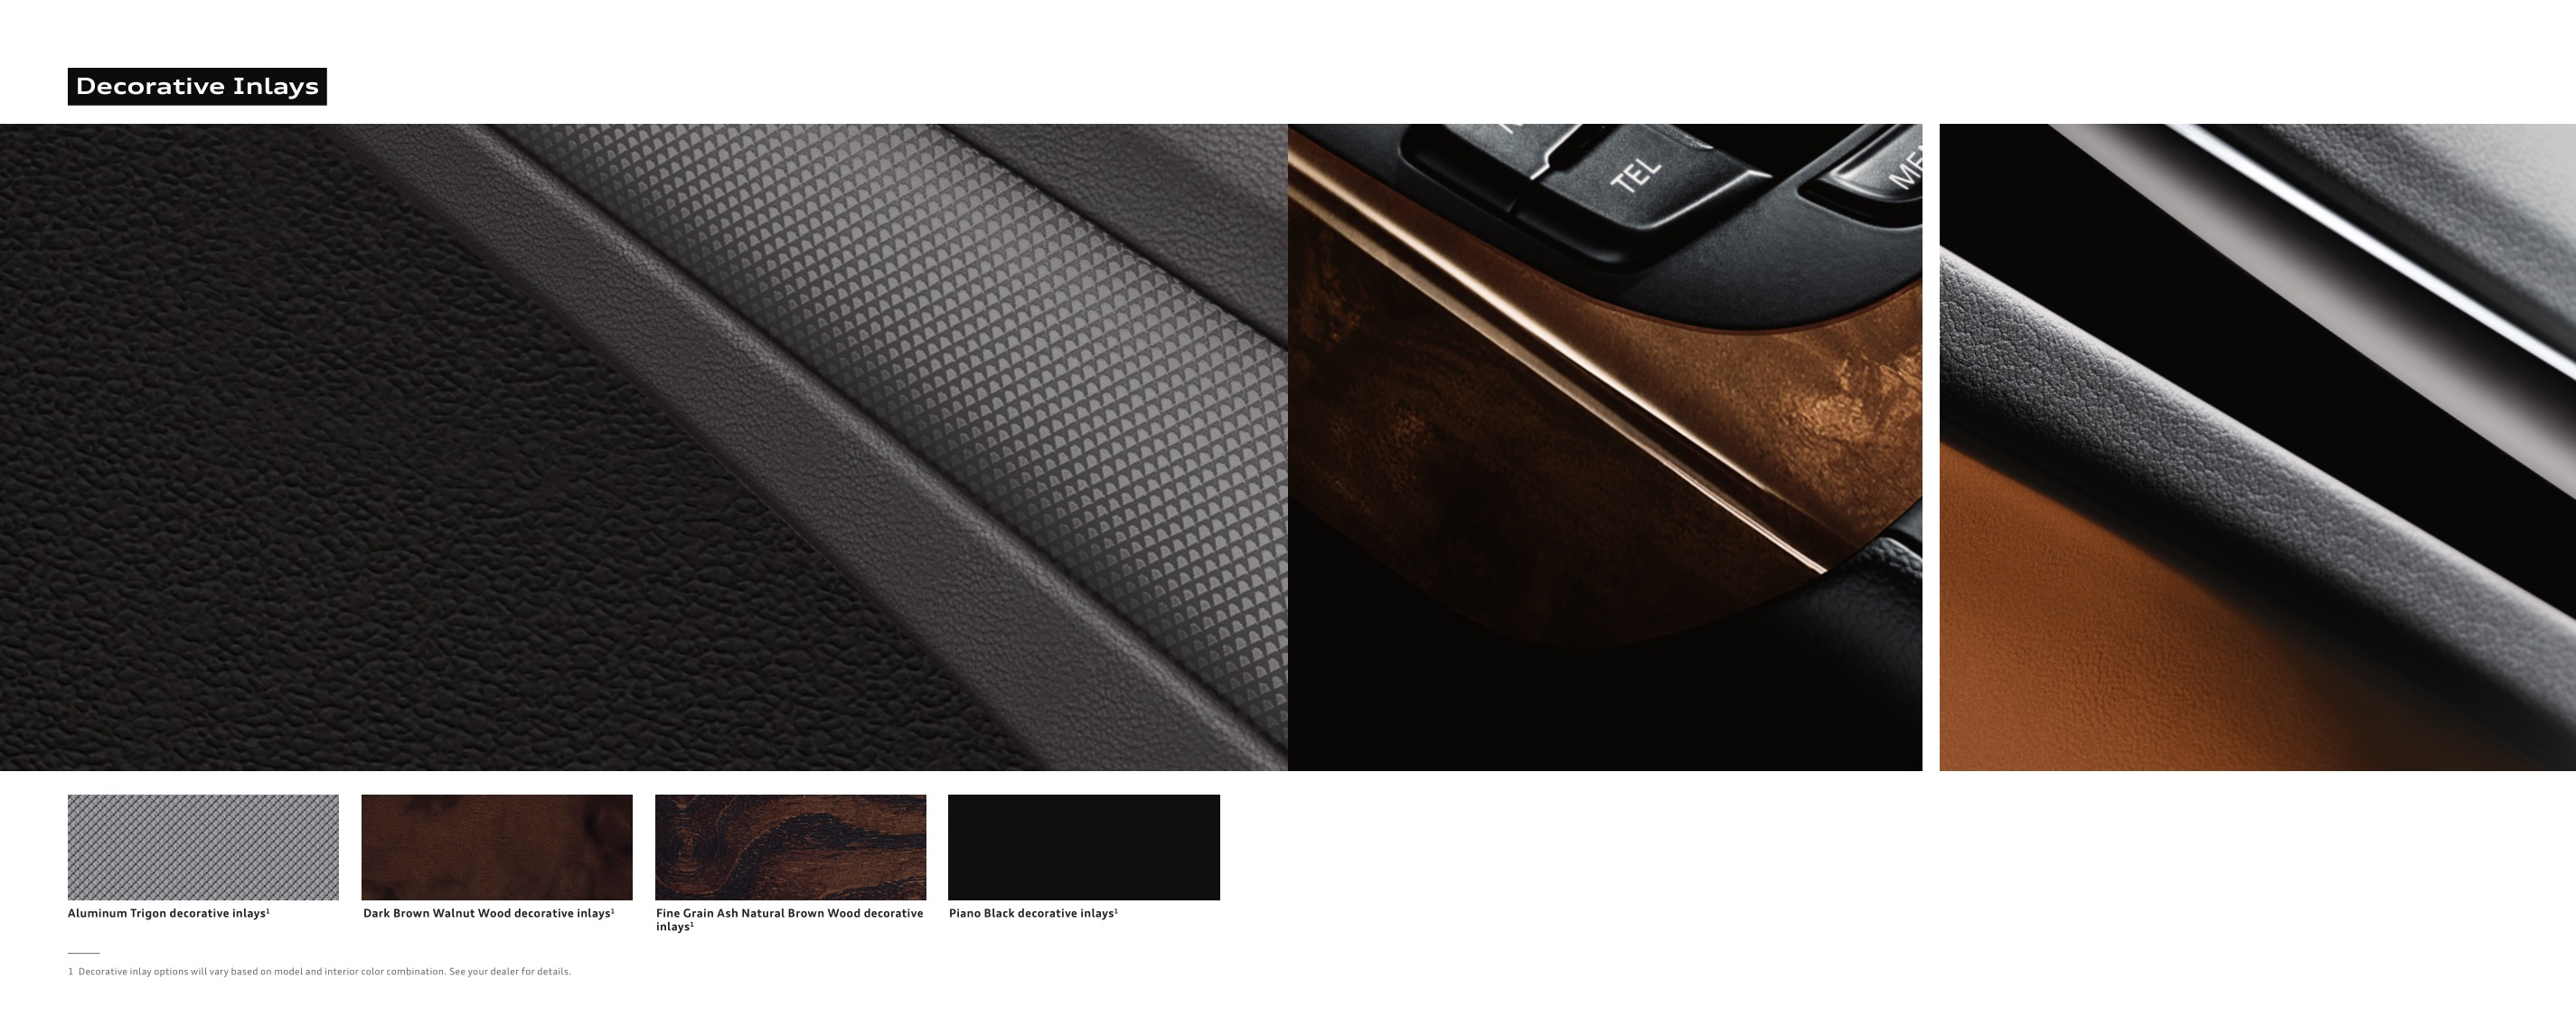 2015 Audi A4 Brochure Page 4